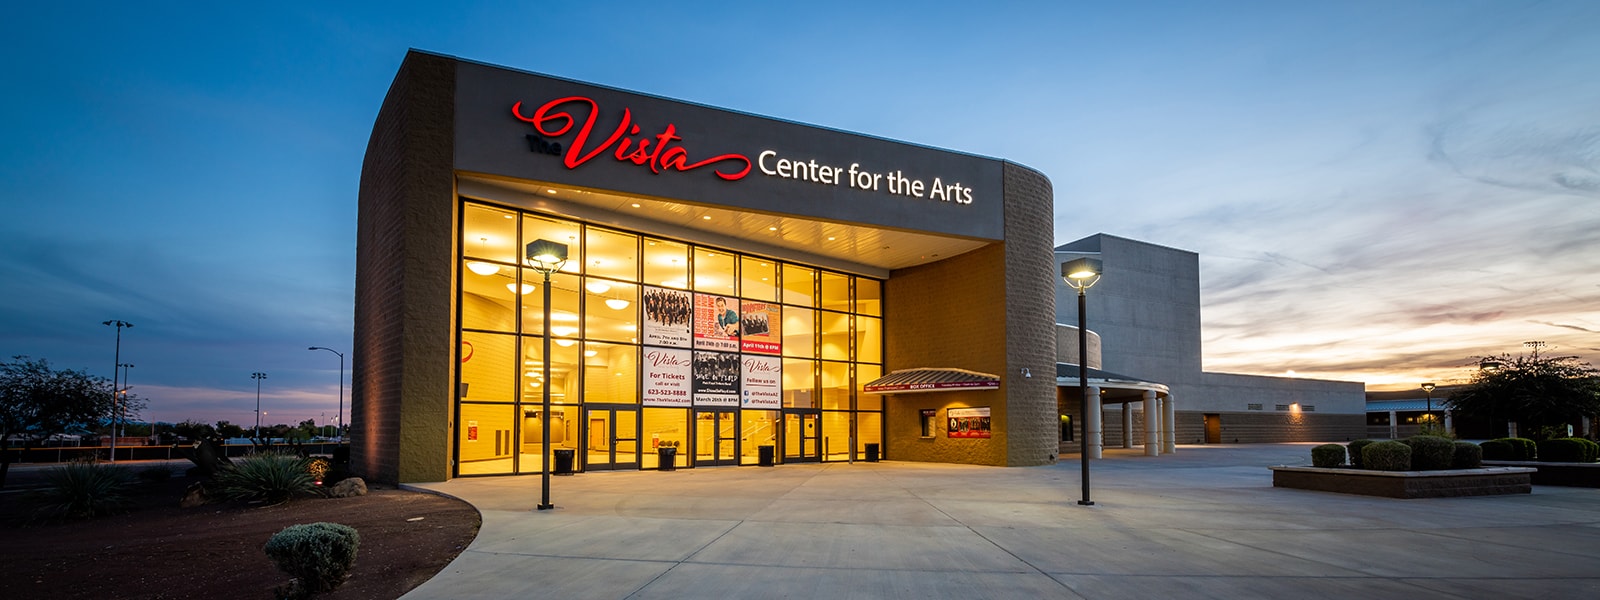 Exterior photo of the Vista Center for the Arts building